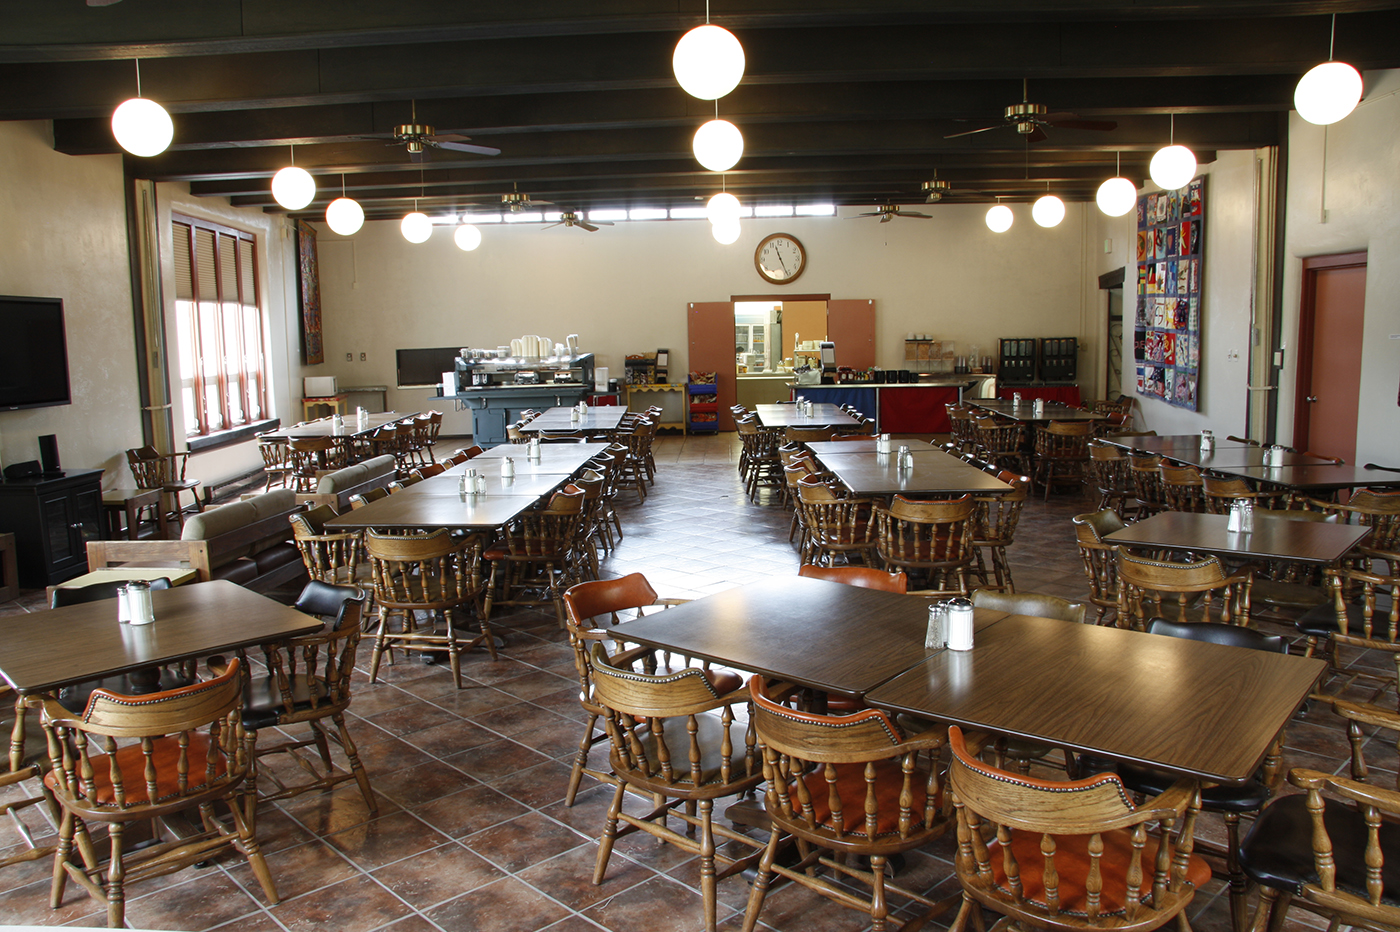 SMU-in-Taos dining hall interior